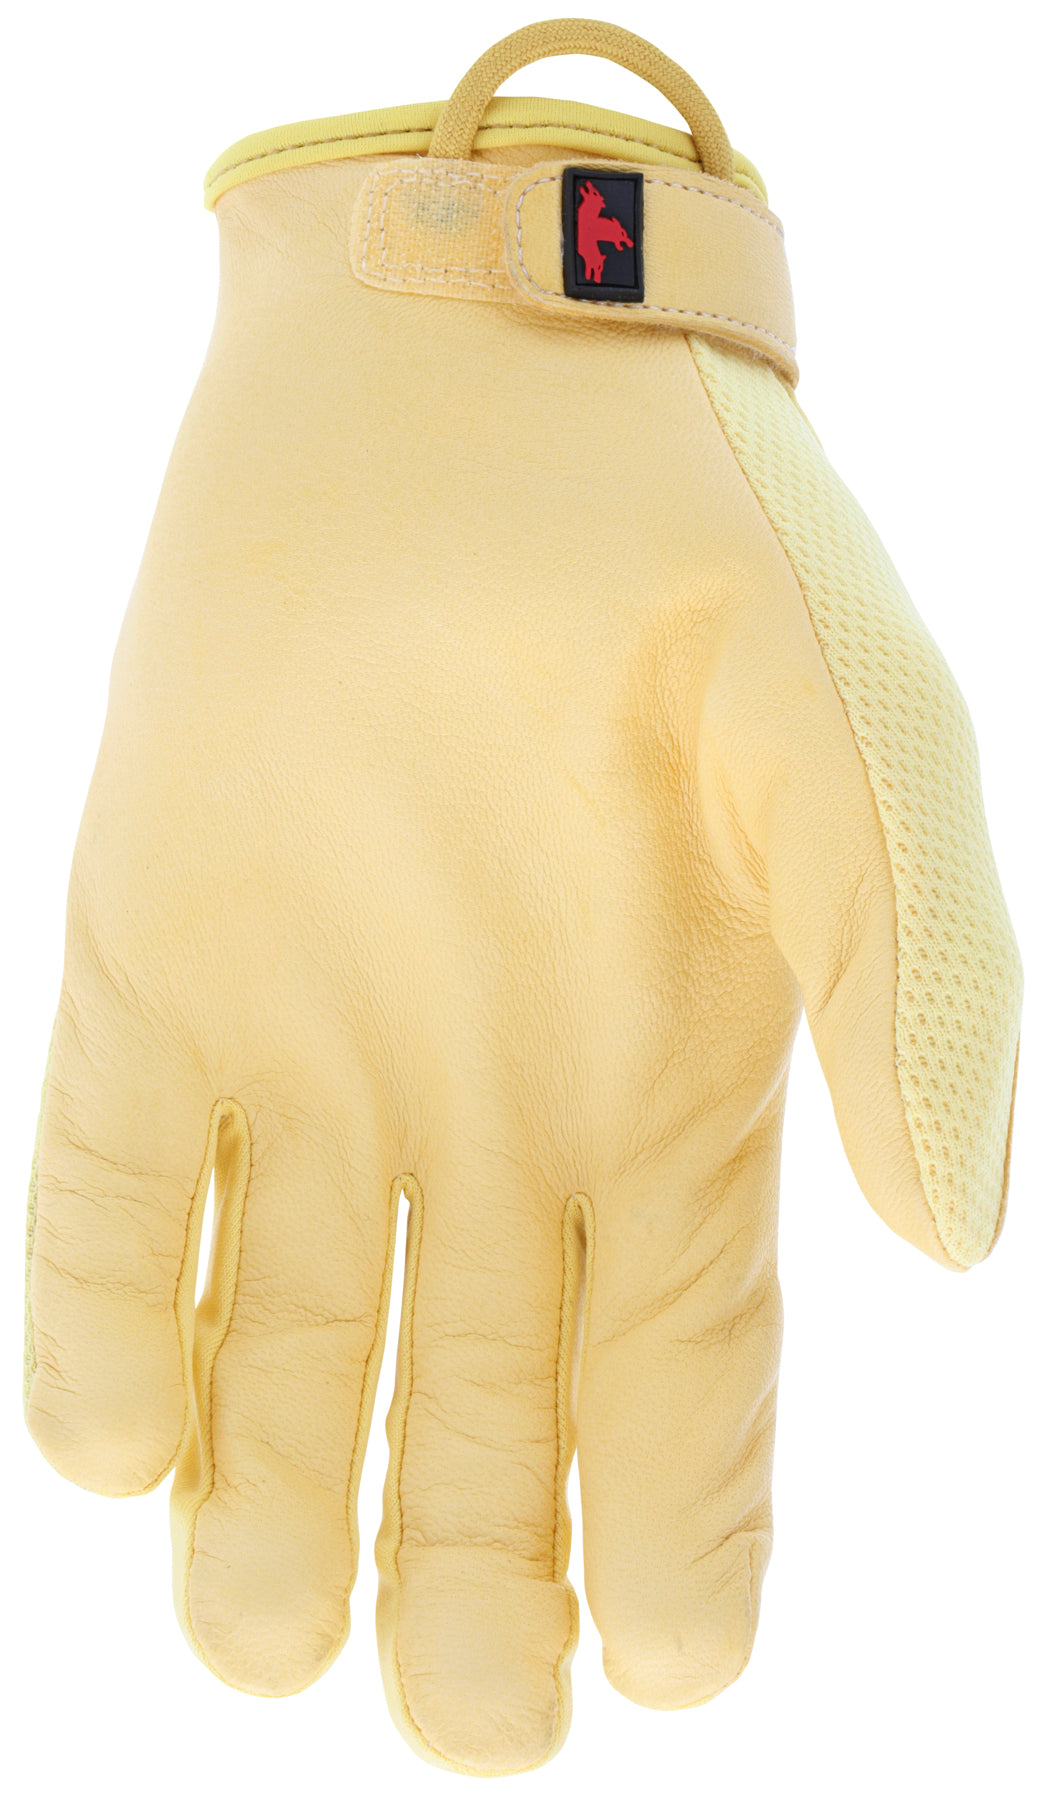 961 - TaskFit Mechanics Gloves